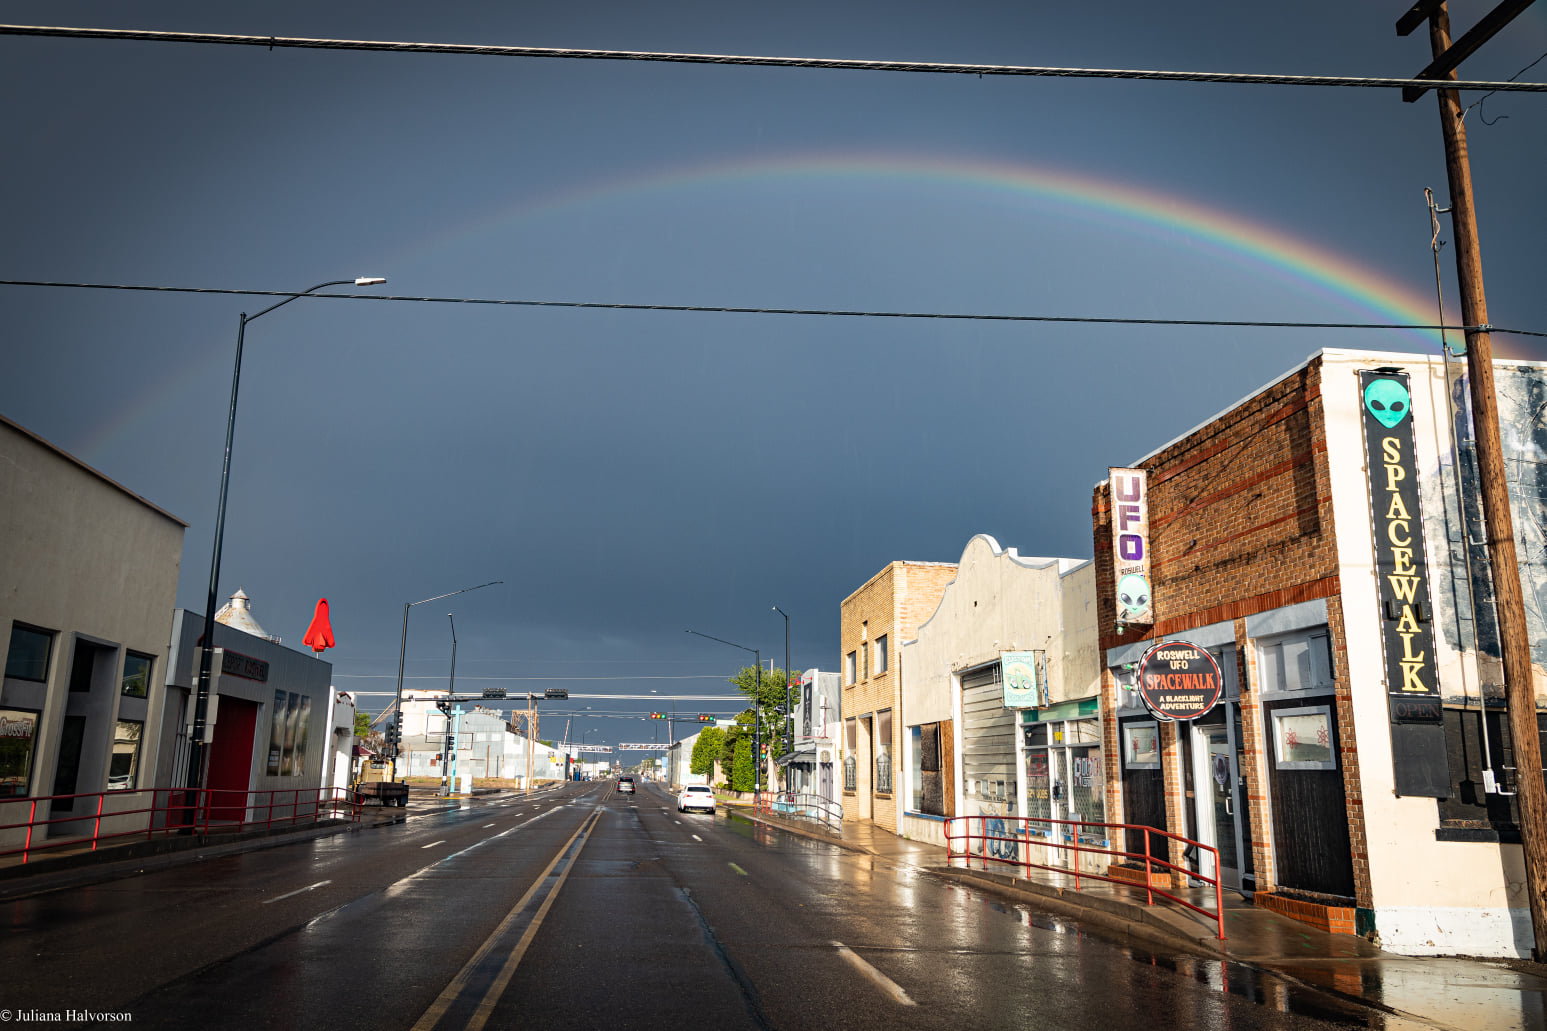 Rainbow over 2nd street's image